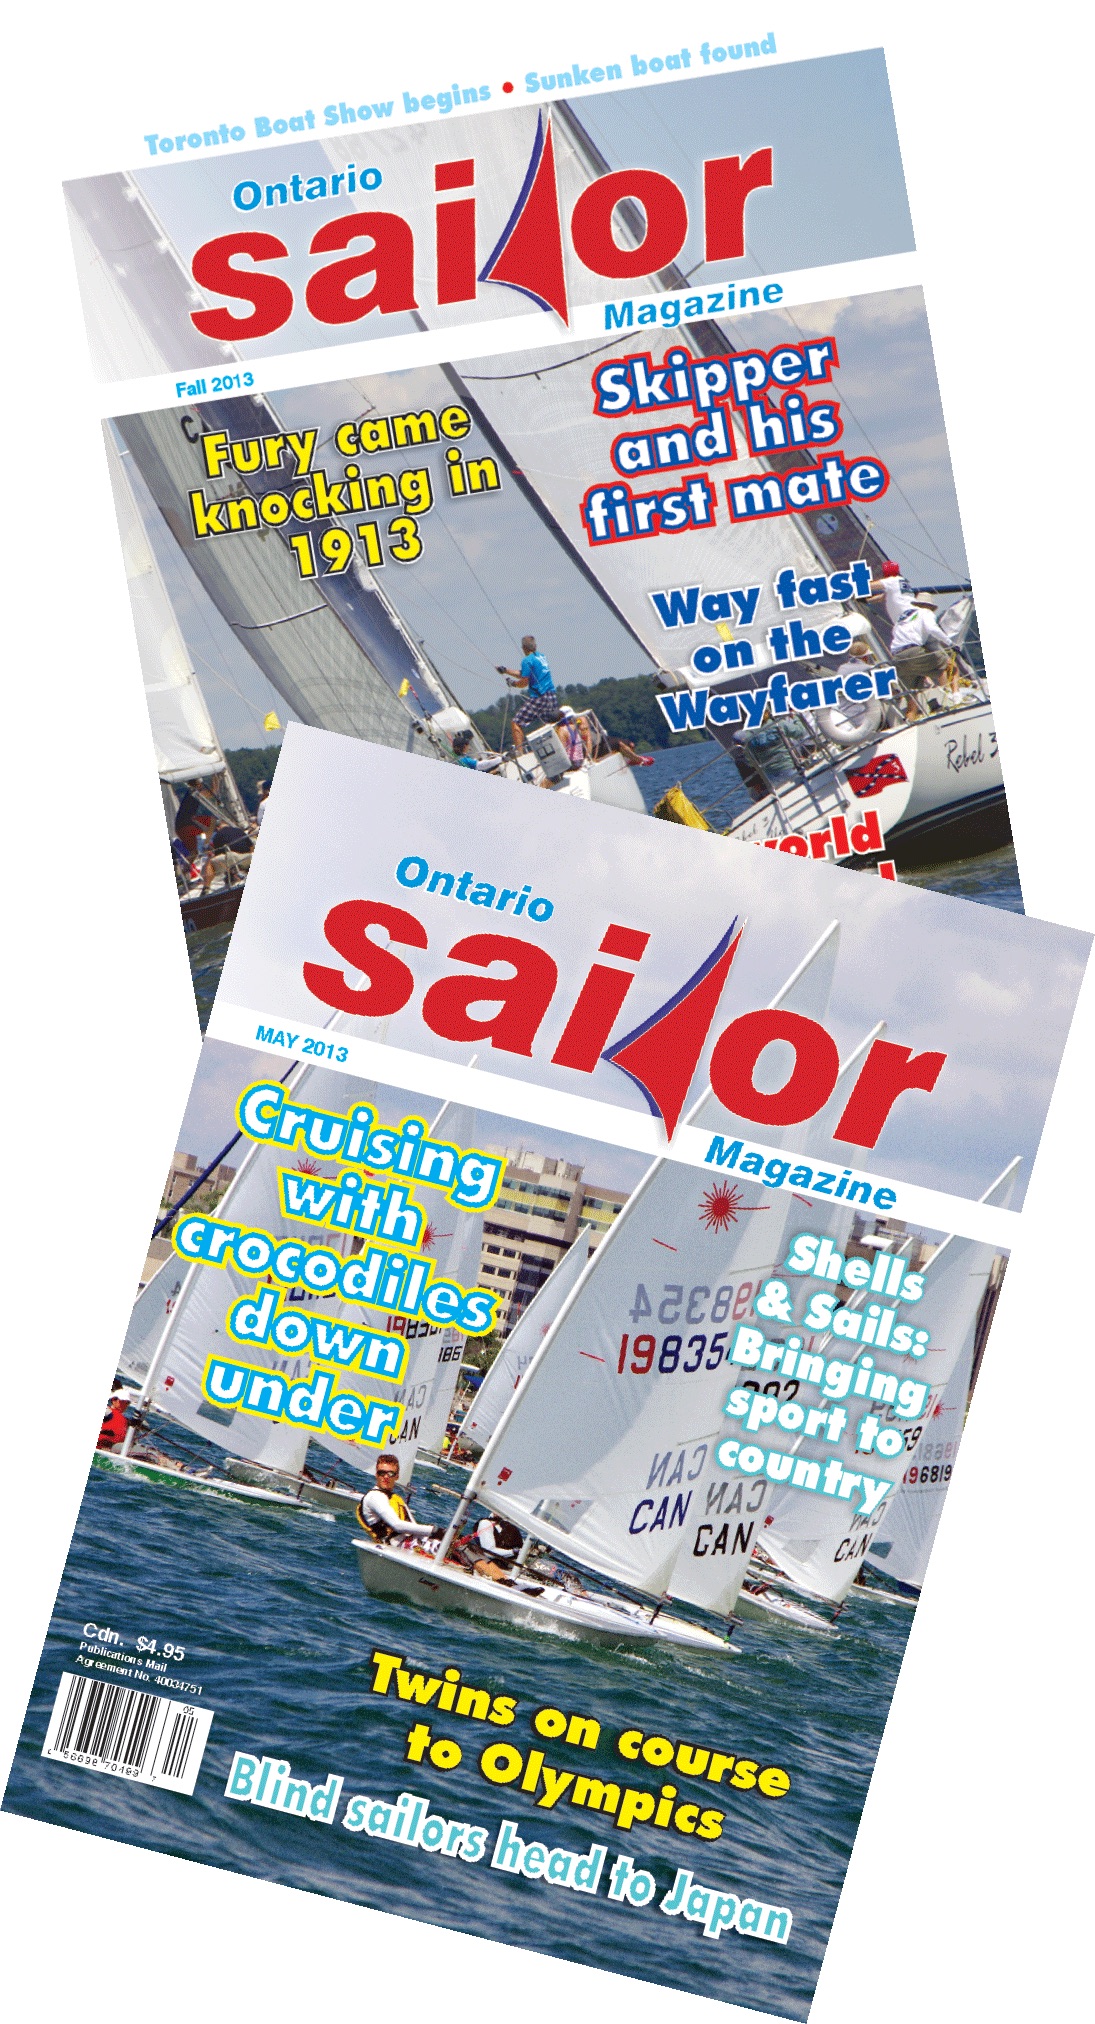 Ontario Sailor Magazine